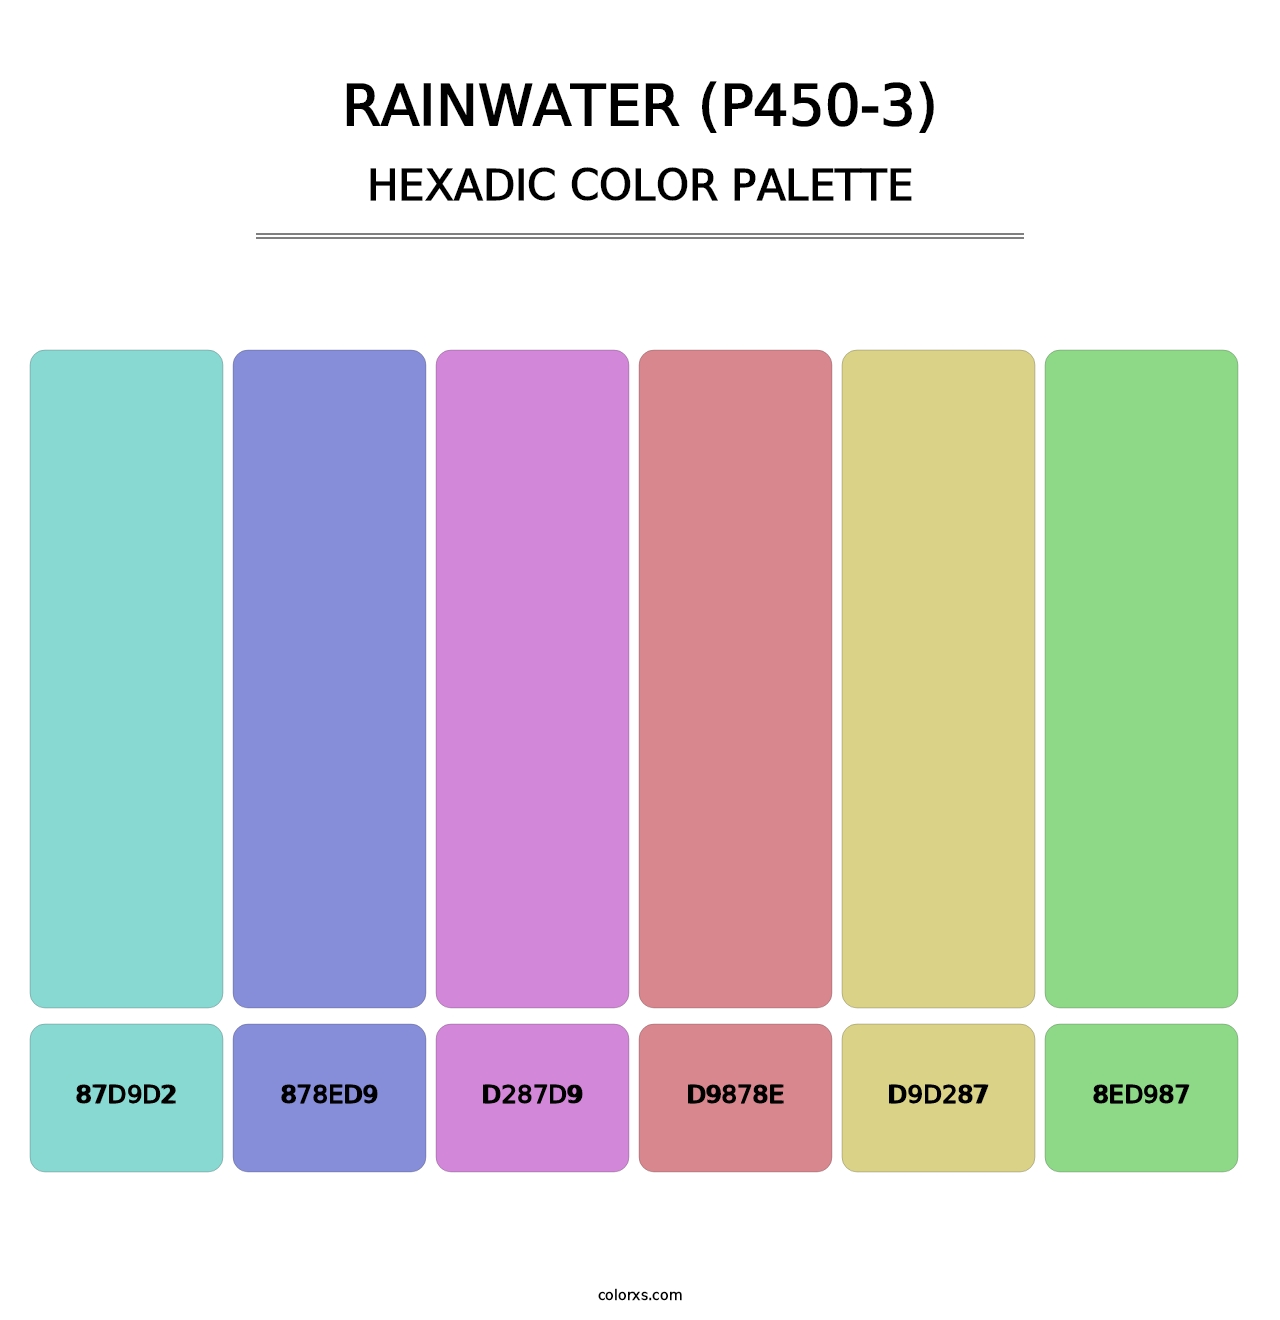 Rainwater (P450-3) - Hexadic Color Palette